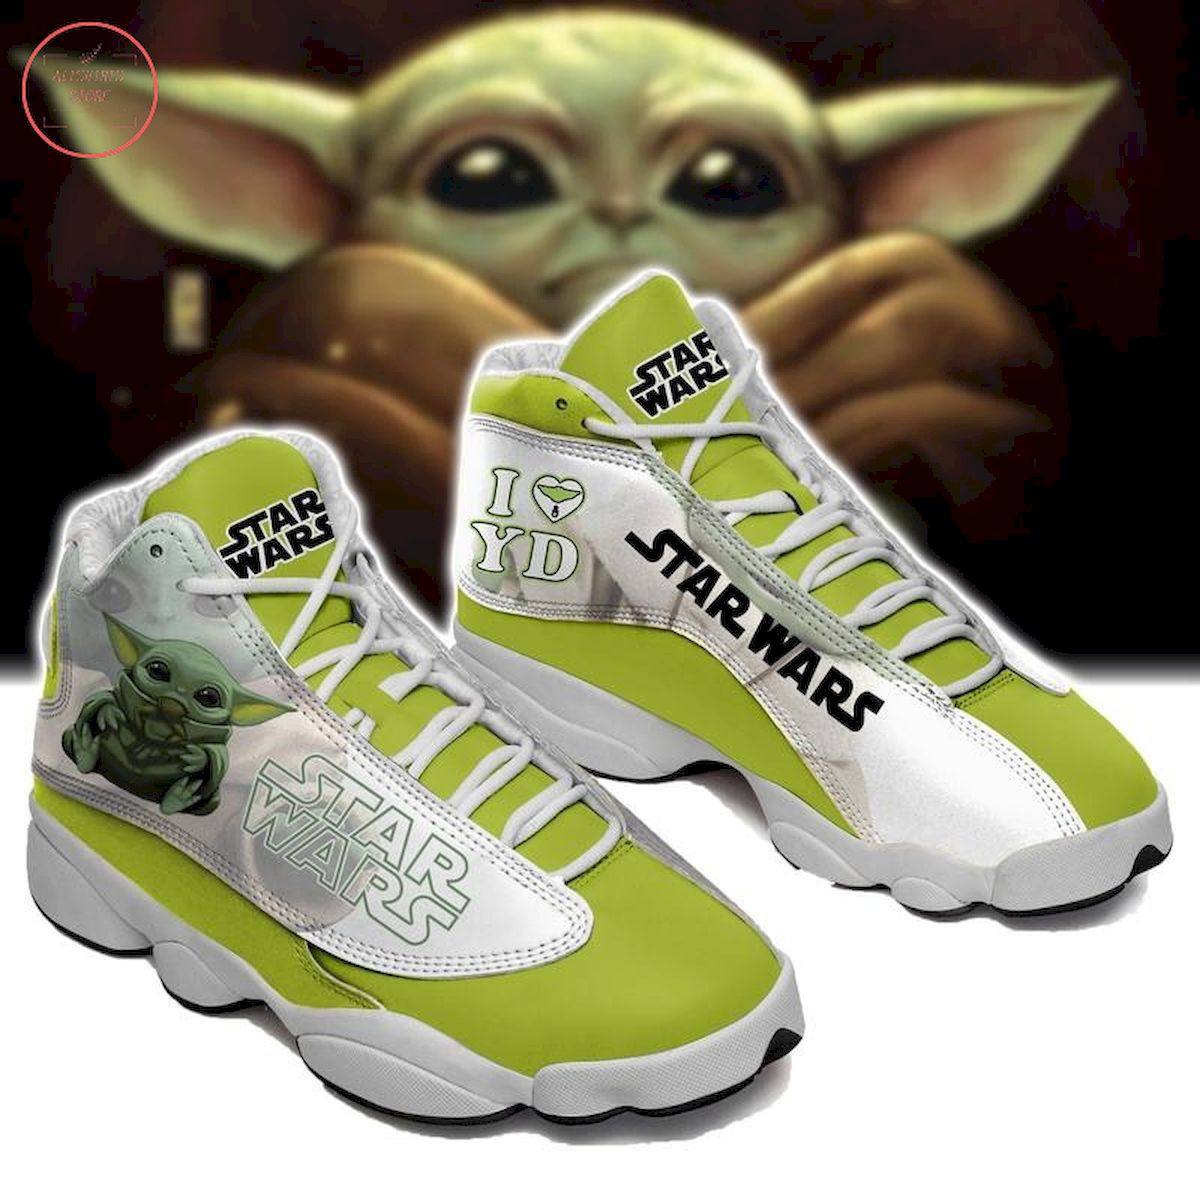 Baby Yoda Star Wars Air Jordan 13 Sneakers Shoes